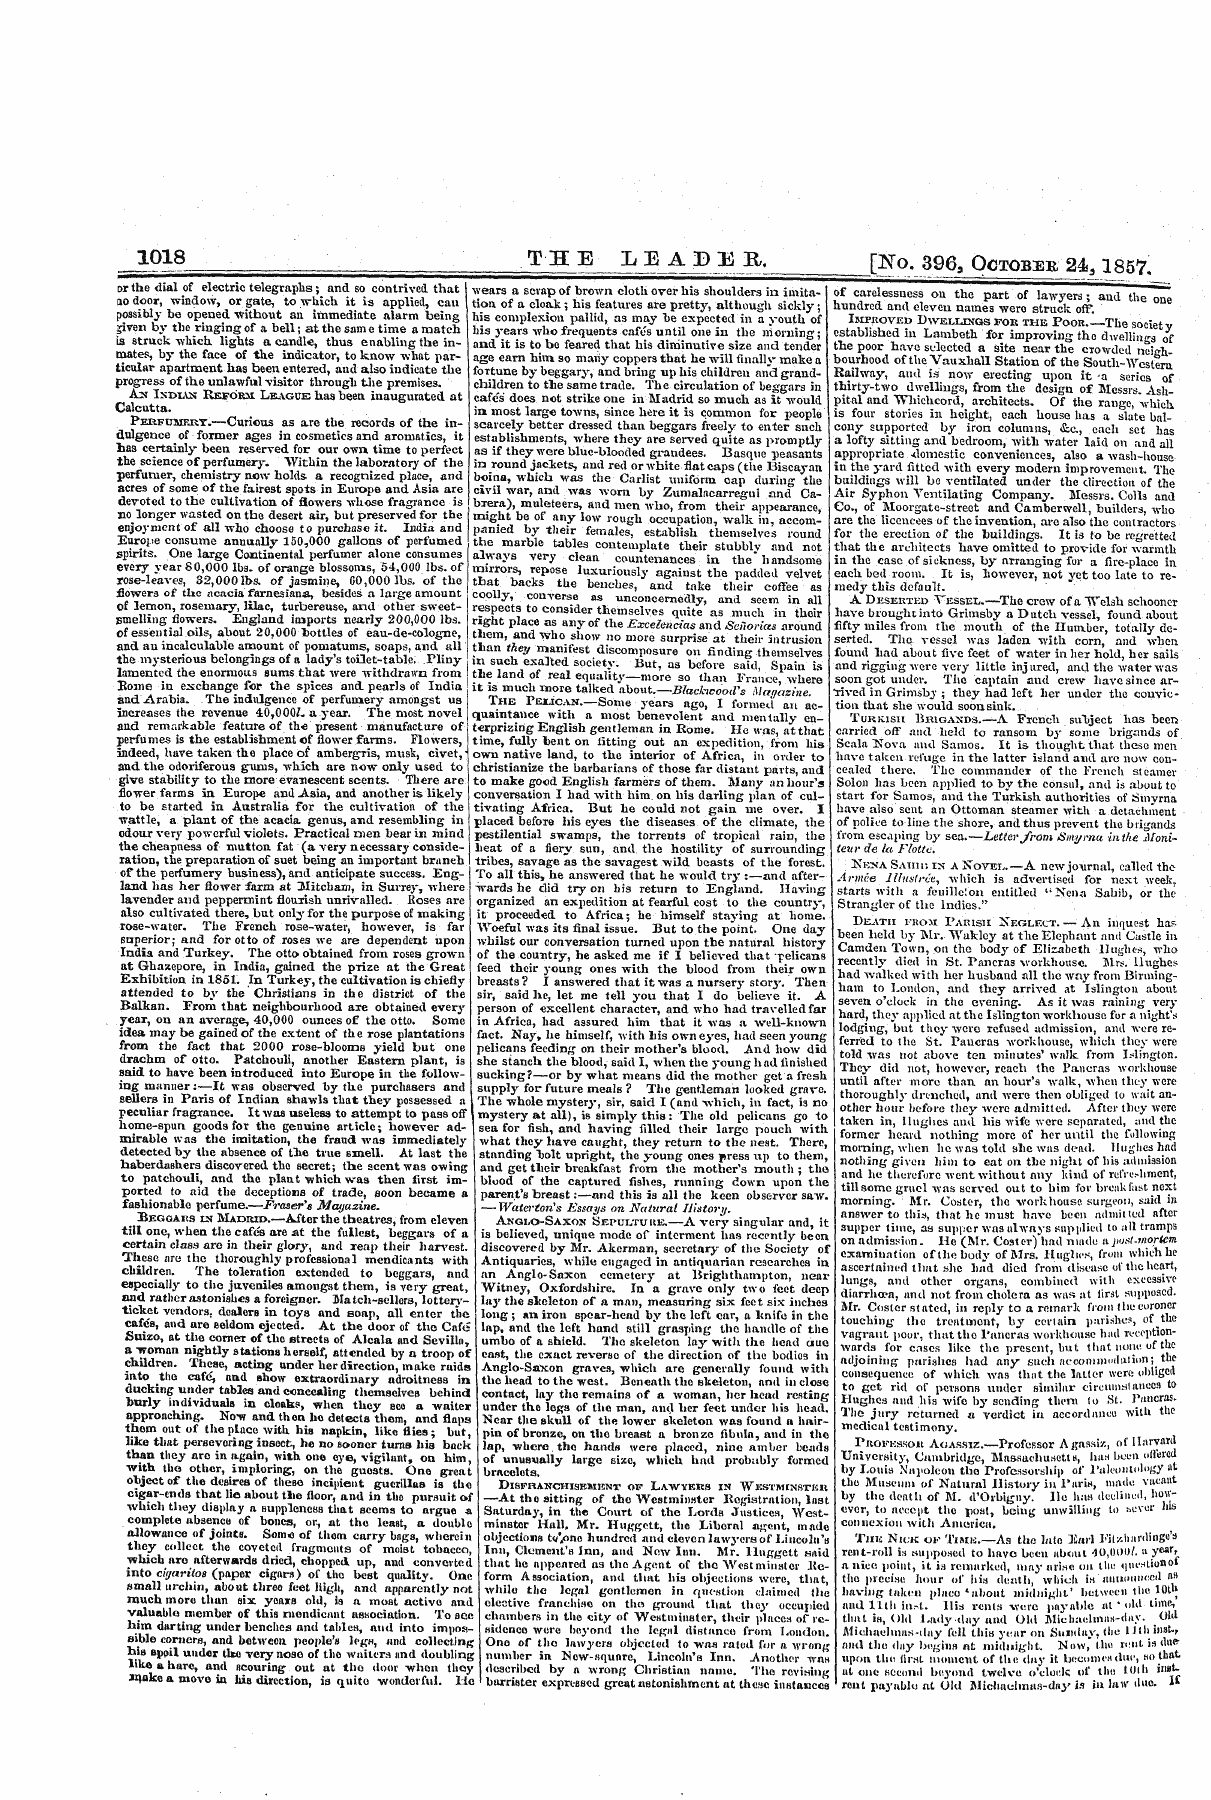 Leader (1850-1860): jS F Y, 2nd edition - T H E R O Or The Dial Of Electric Telegr...